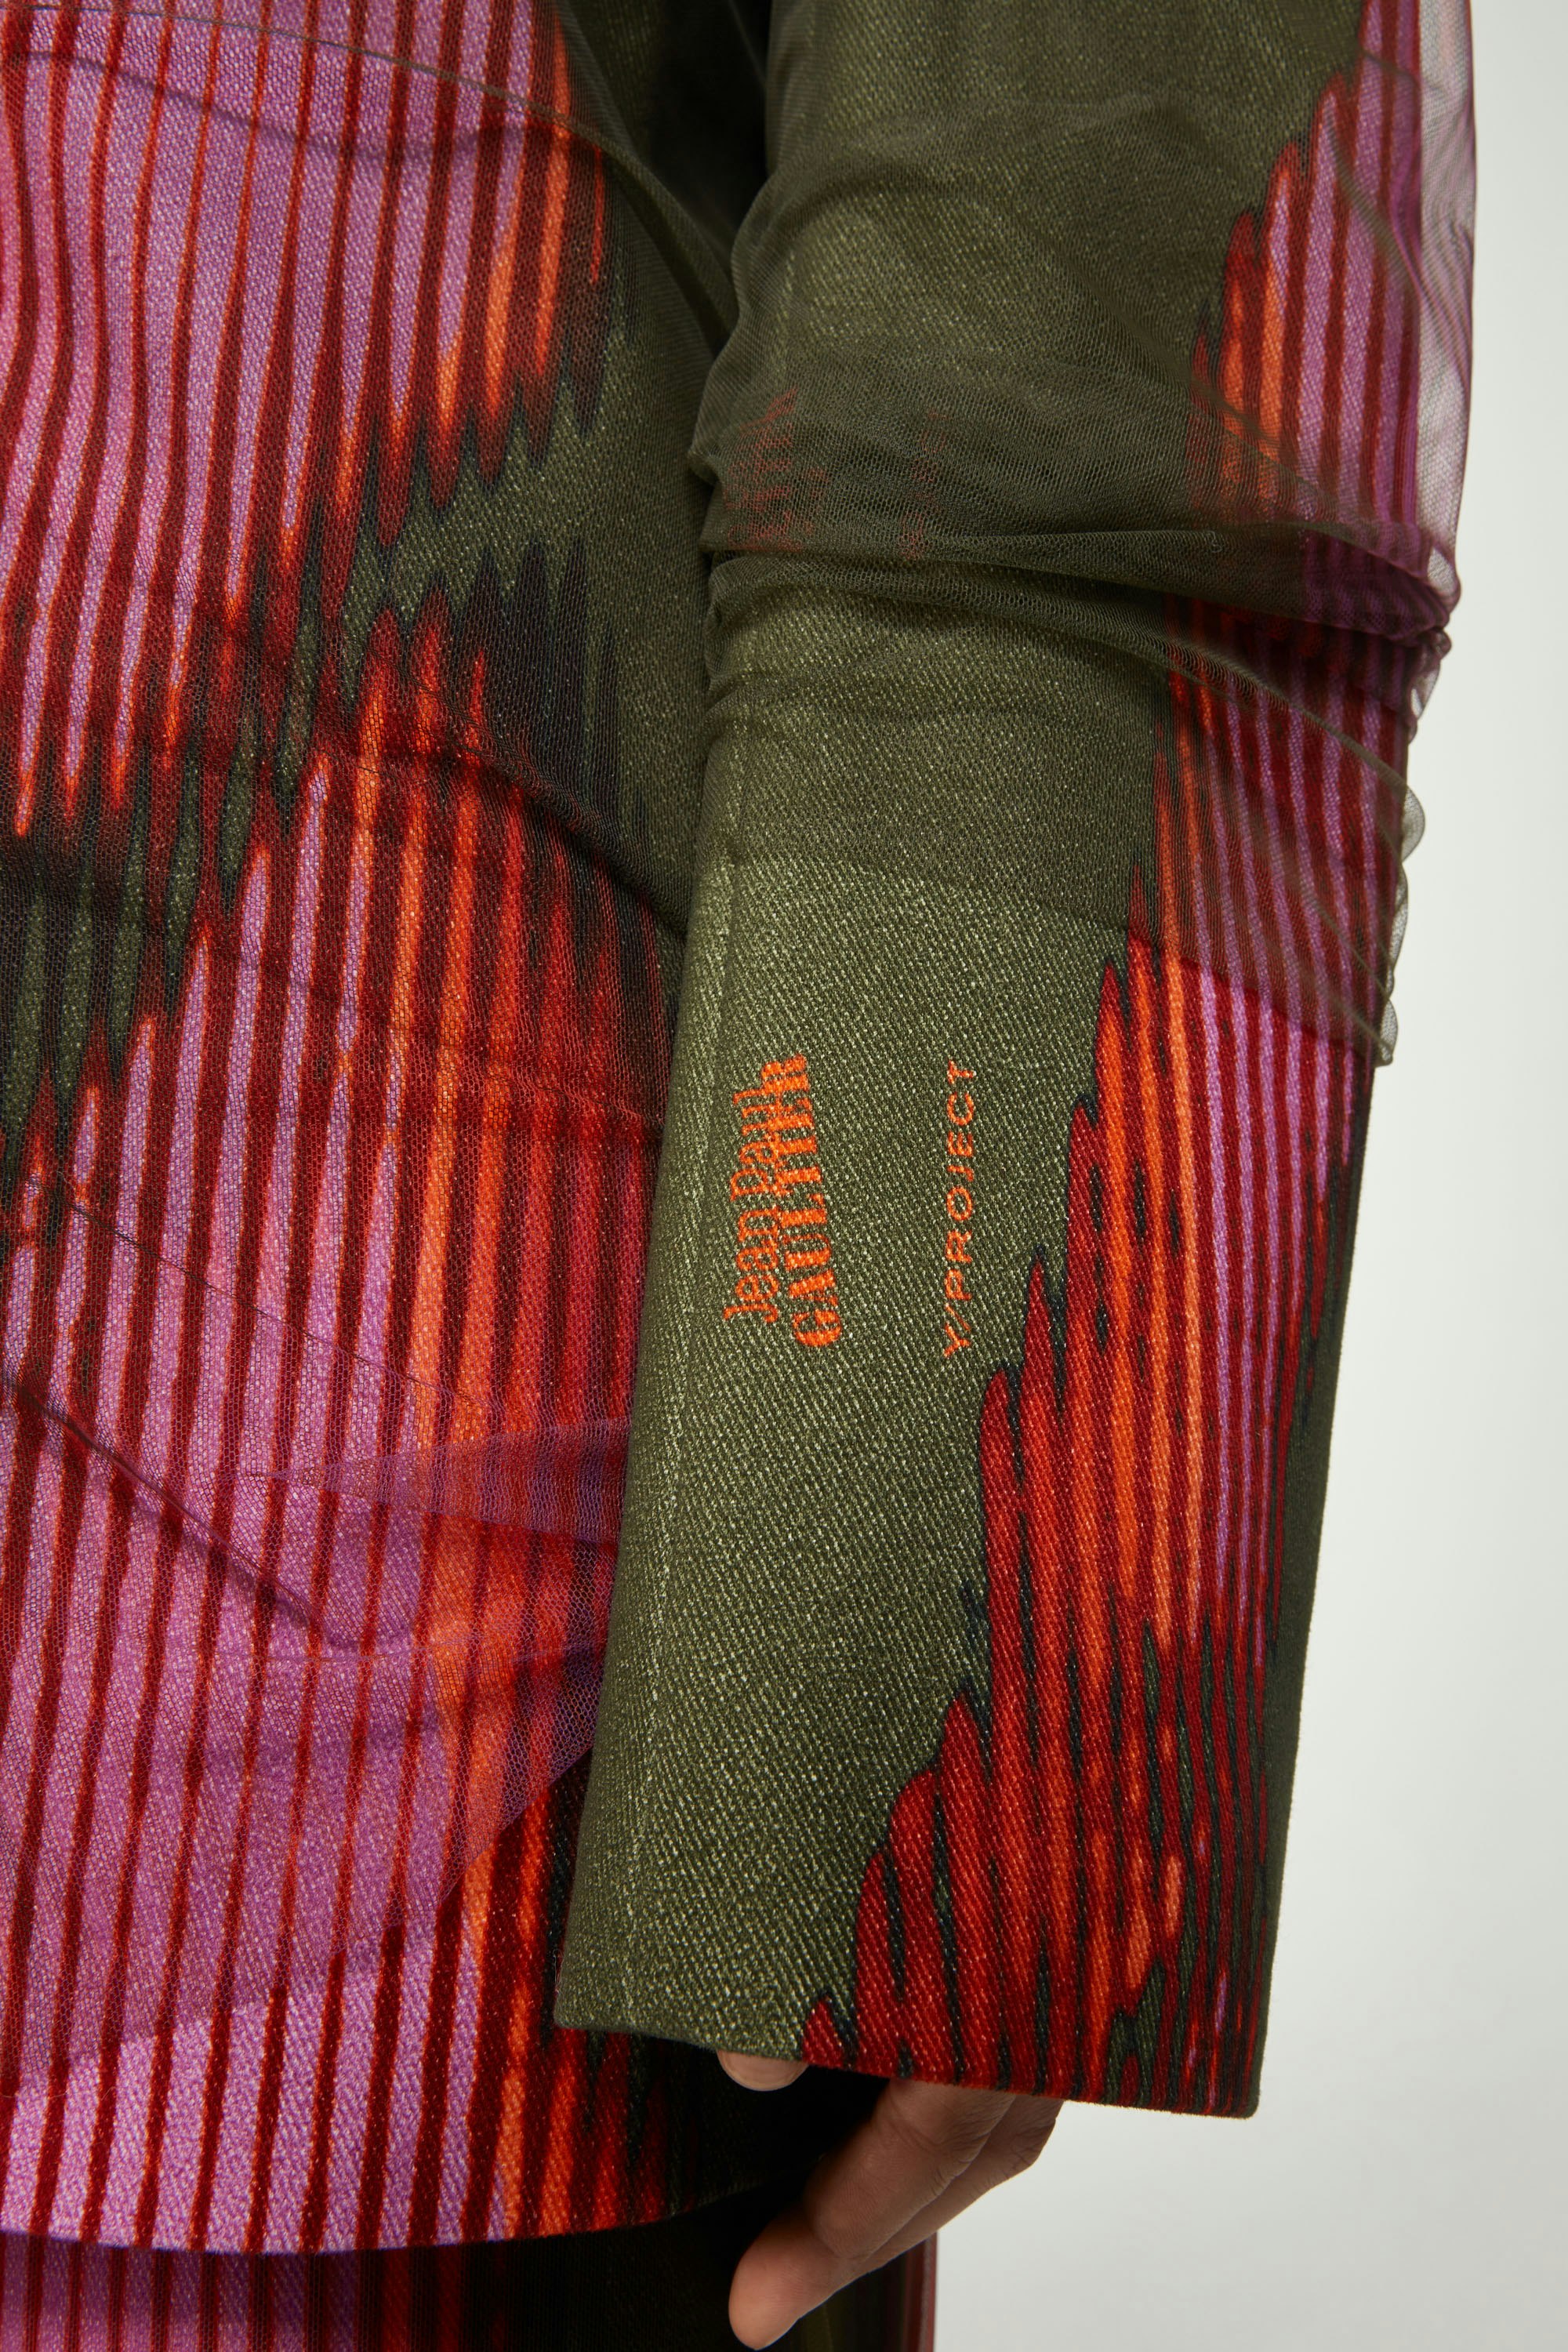 The Pink & Khaki Body Morph Blazer by Jean Paul Gaultier x Y/Project